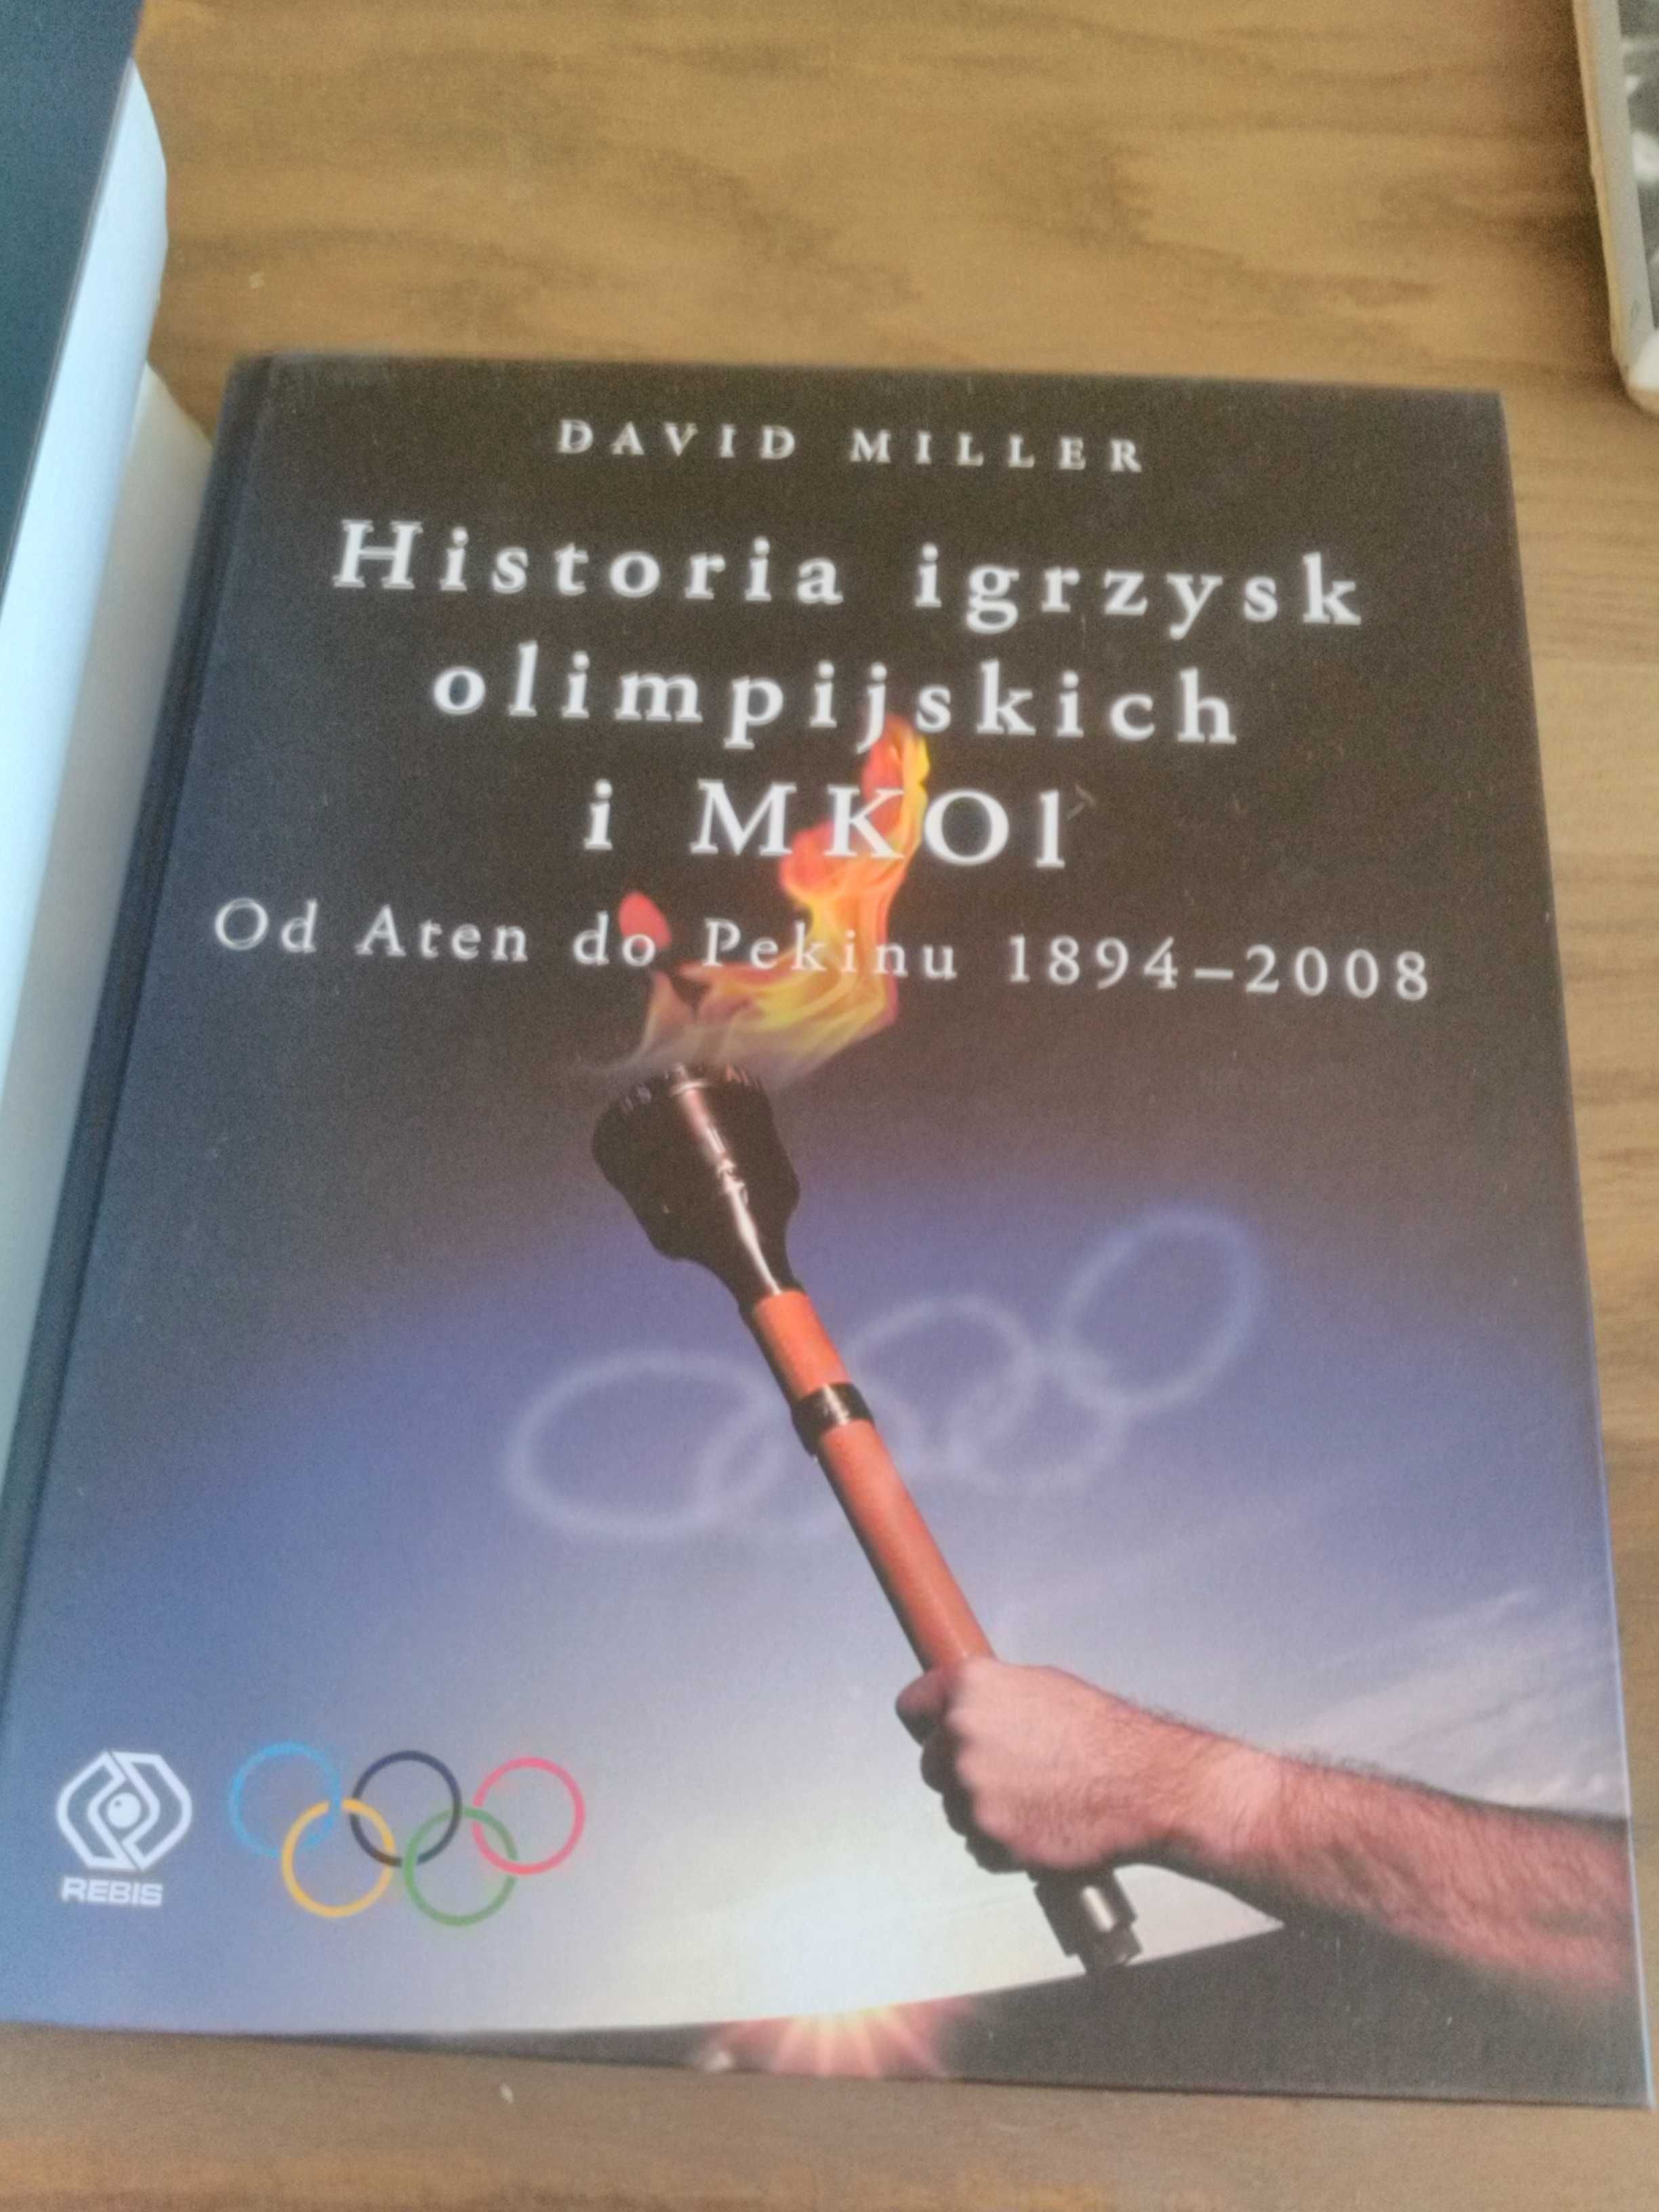 D. Miller, Historia igrzysk olimpijskich i MKOL